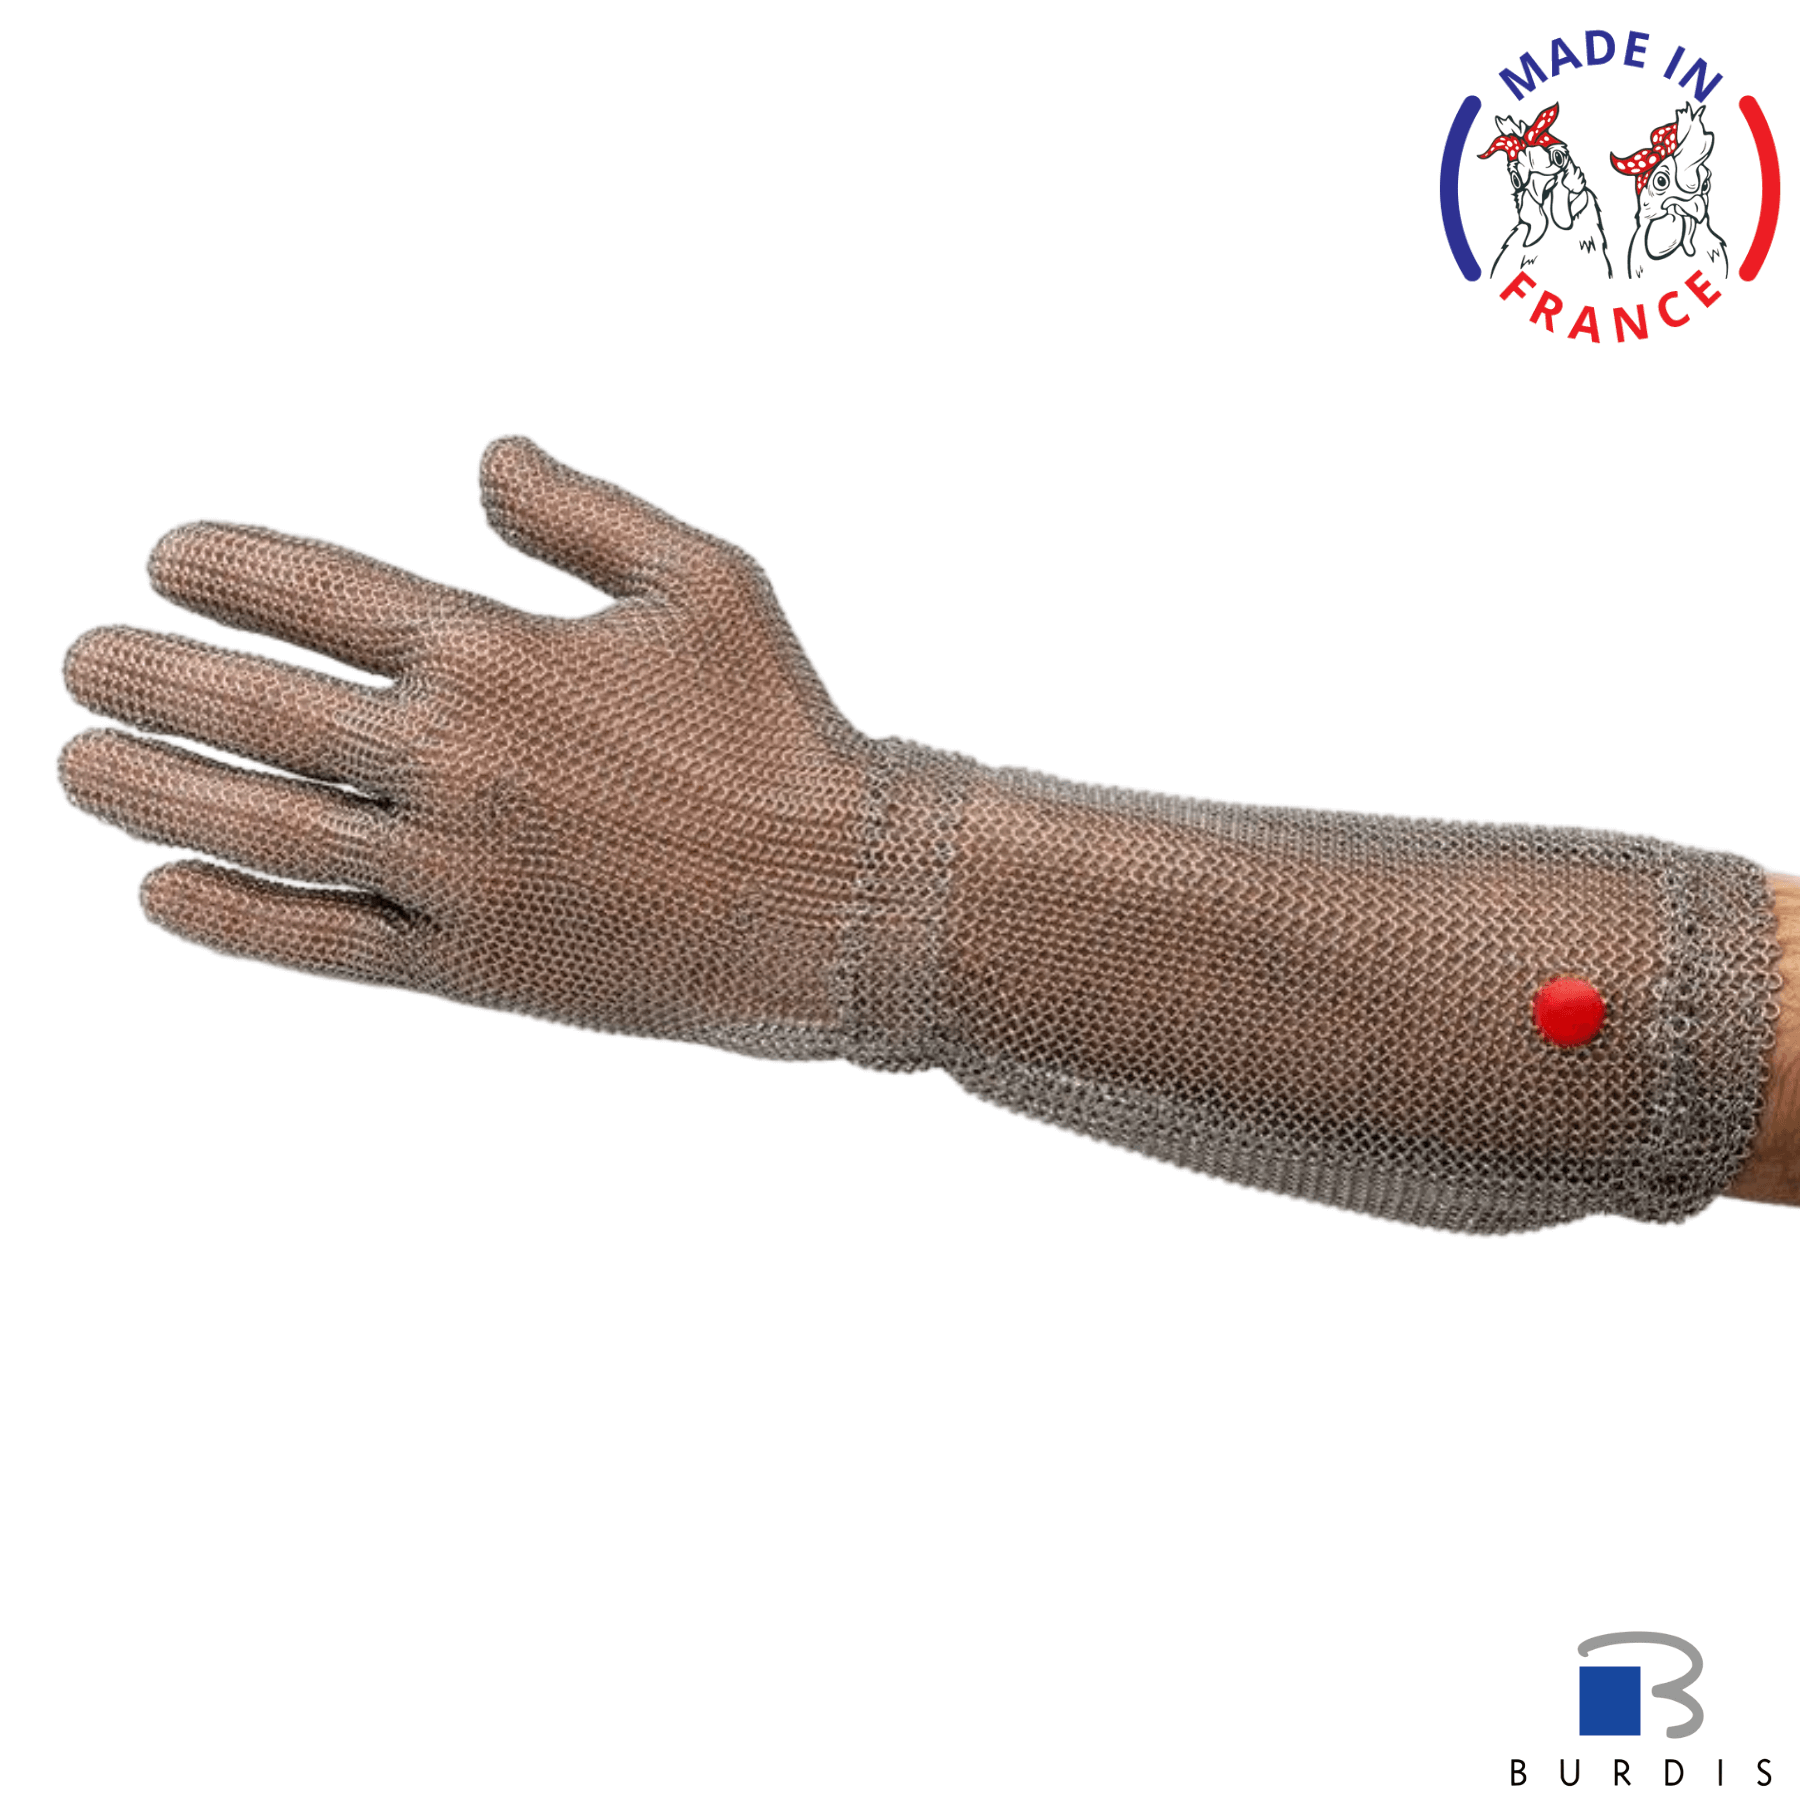 Stainless steel metal mesh glove - Burdis